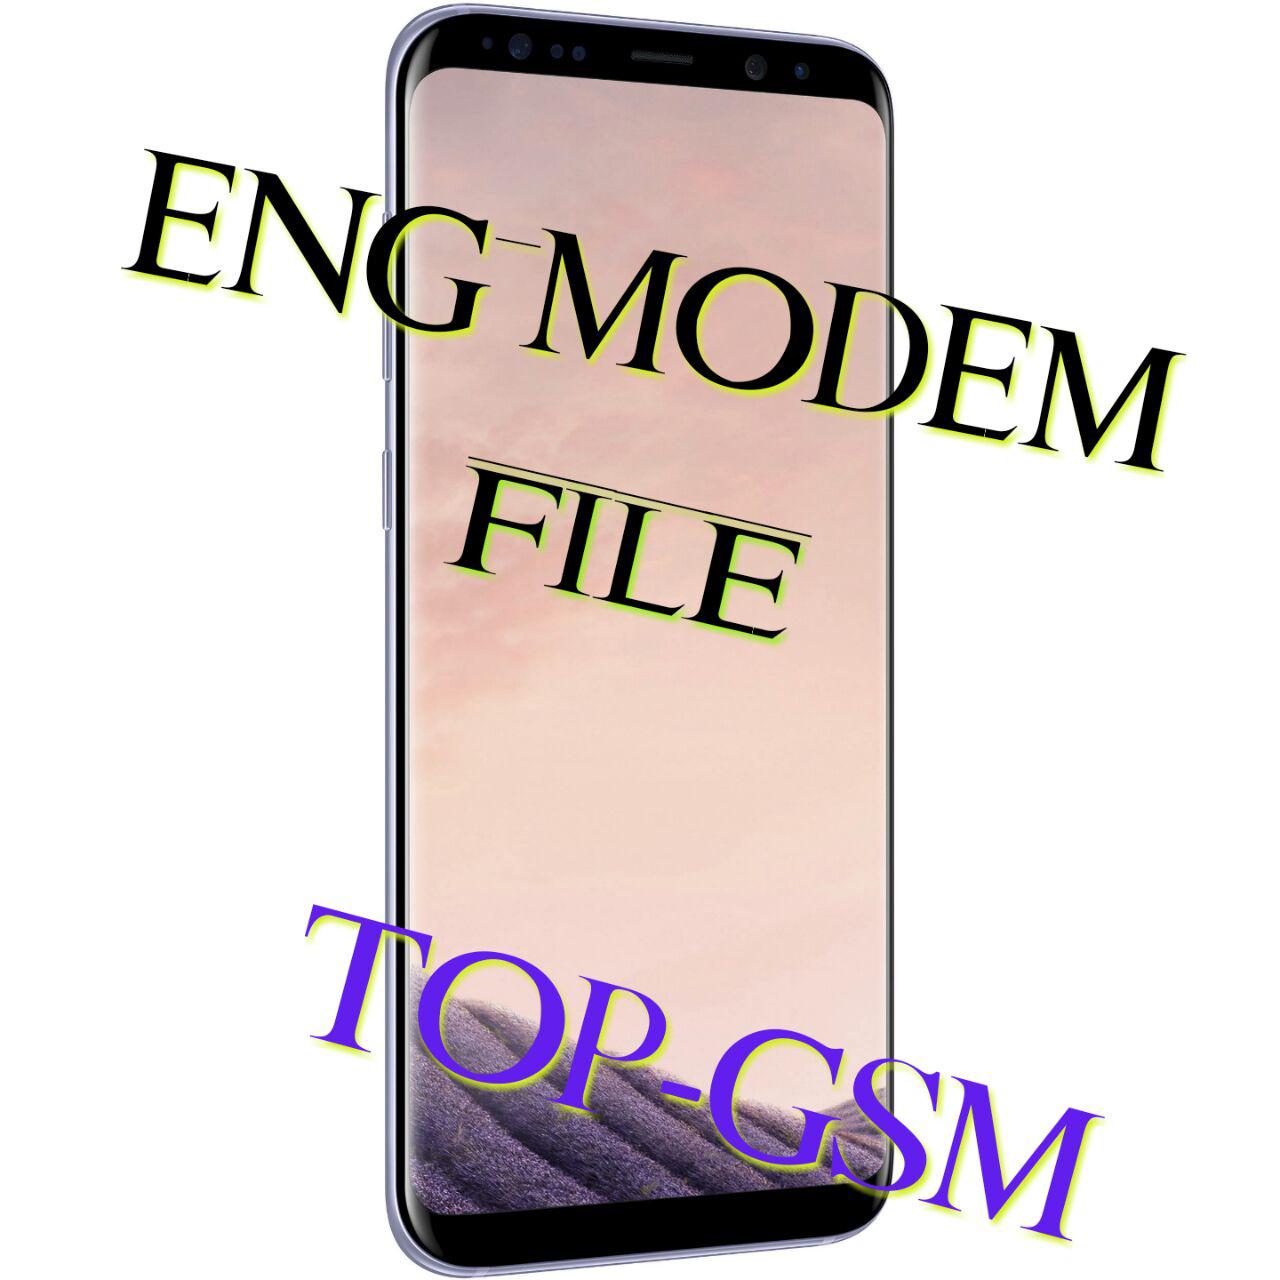 فایل ENG MODEM سامسونگ G925T-U2 حل مشکل سریال و بیسباند و..